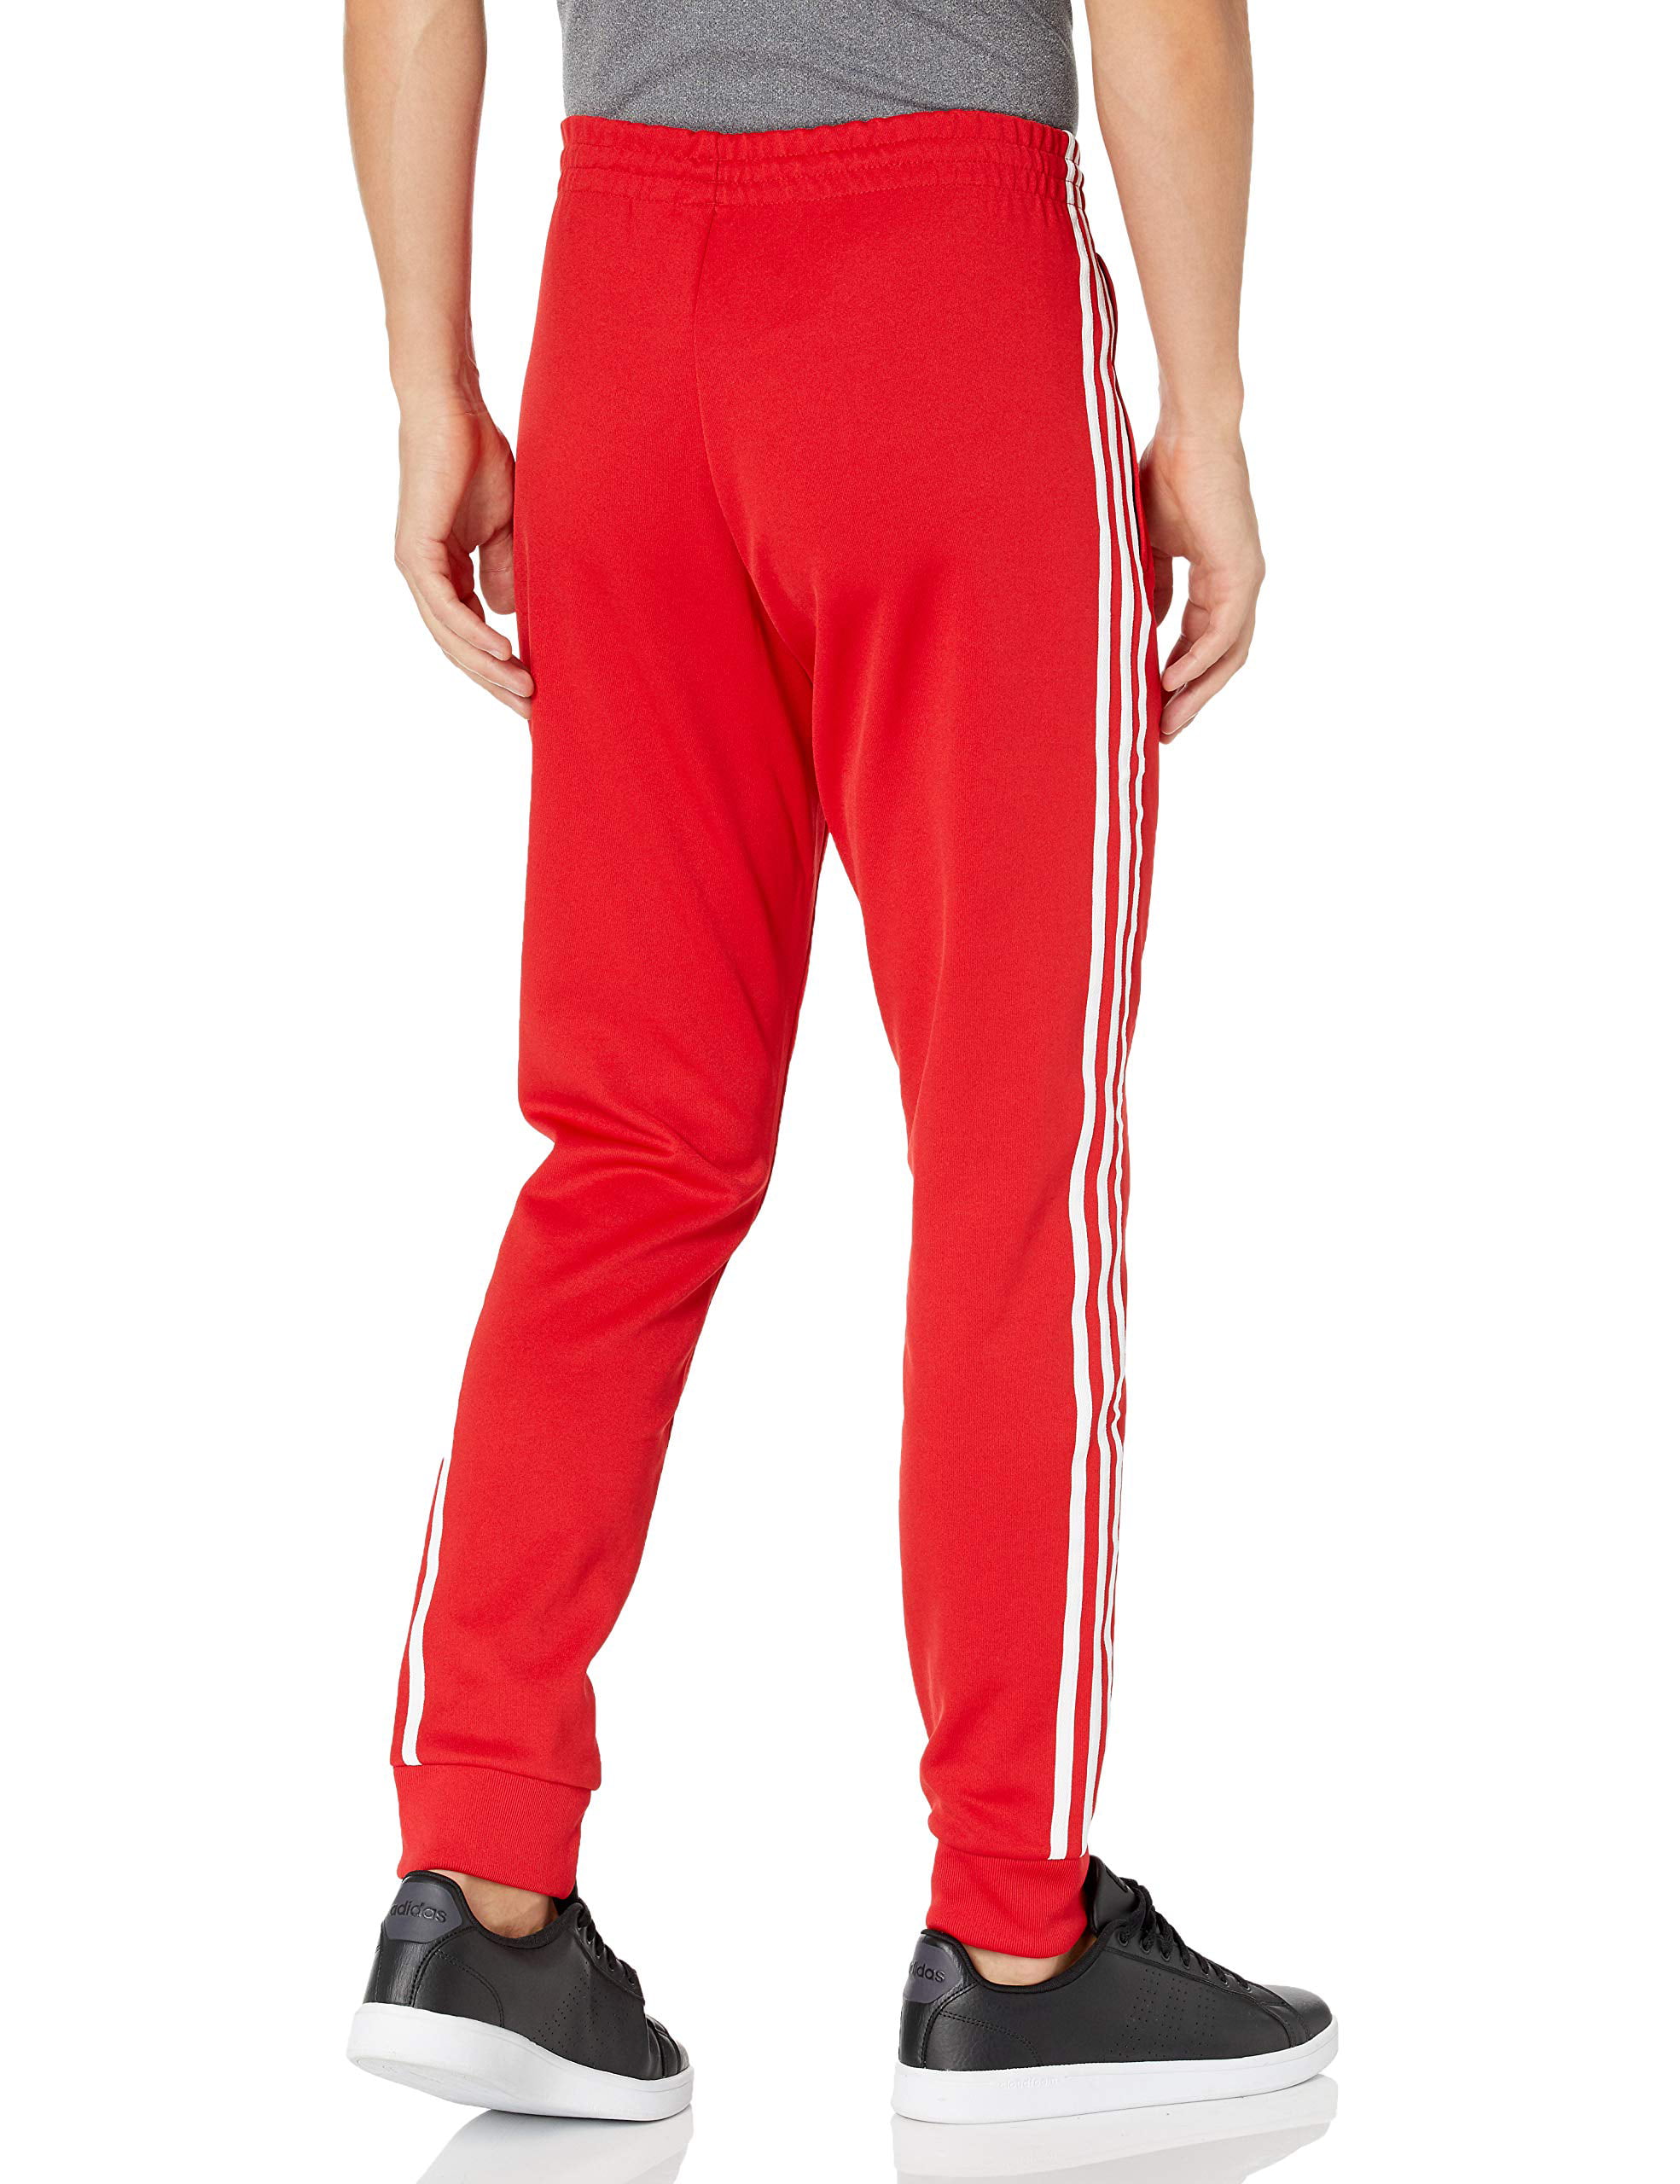 Scarlet/ Track Primeblue Pants, Originals White, Sst Adicolor adidas US Classics mens X-Large